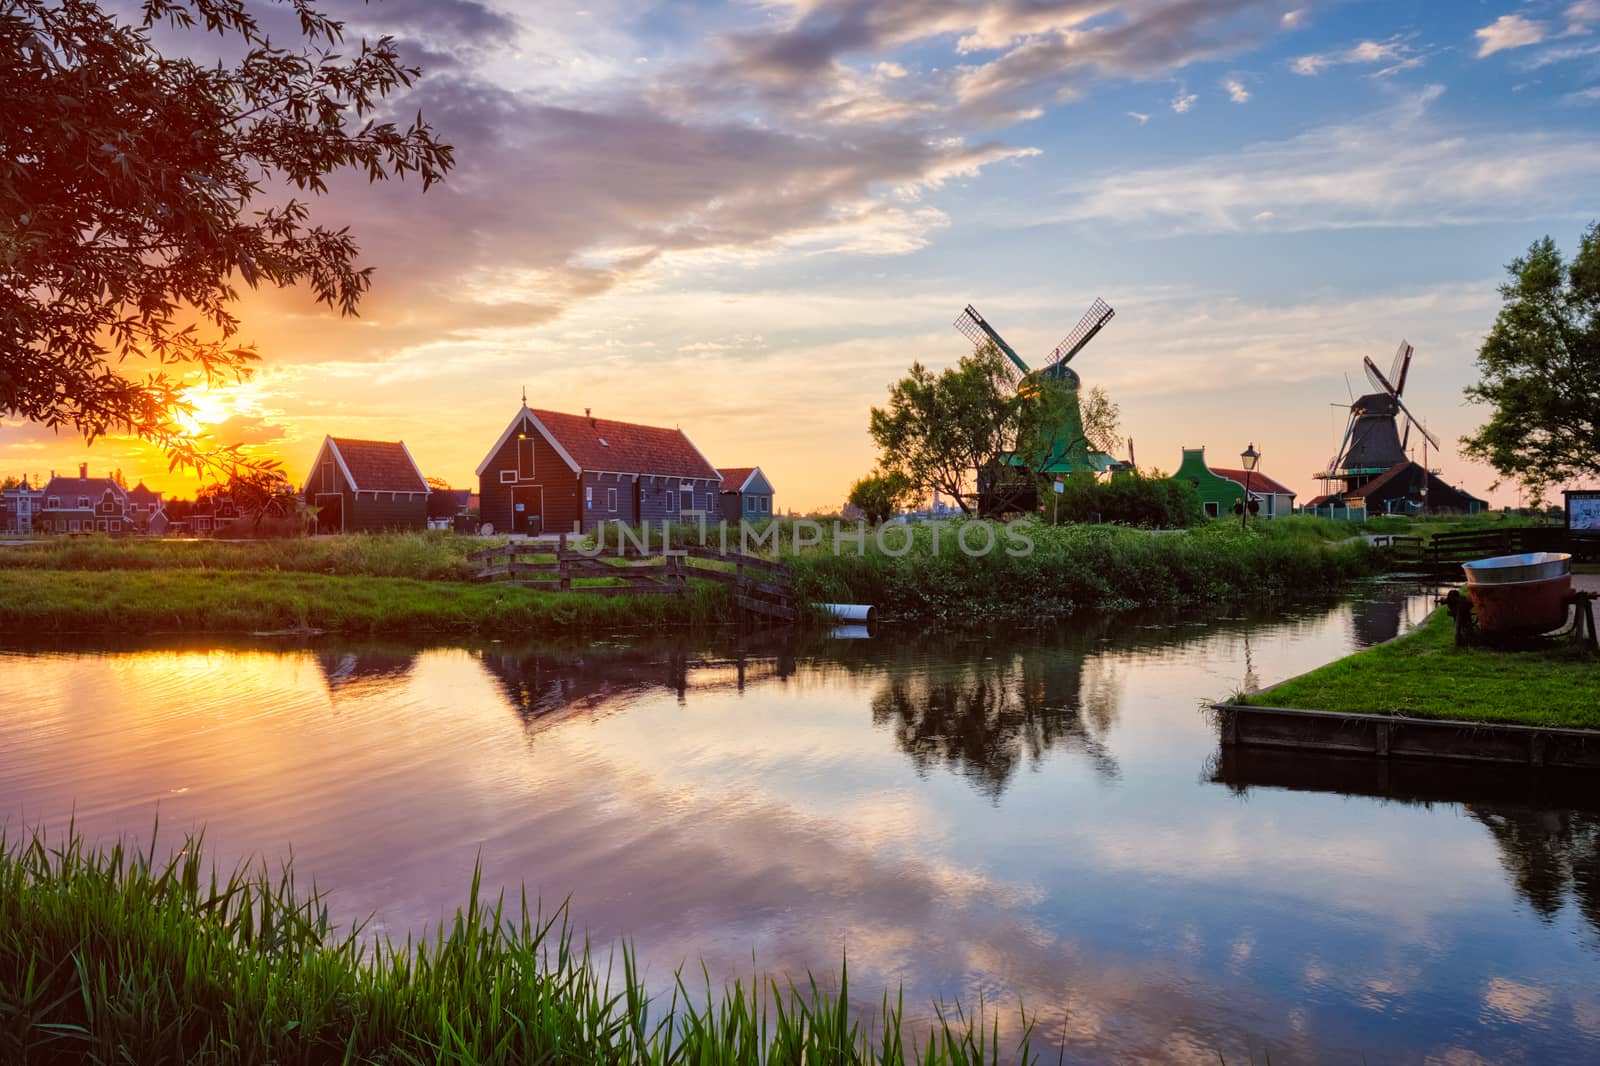 Netherlands rural scene - - windmills at famous tourist site Zaanse Schans in Holland on sunset with dramatic sky. Zaandam, Netherlands